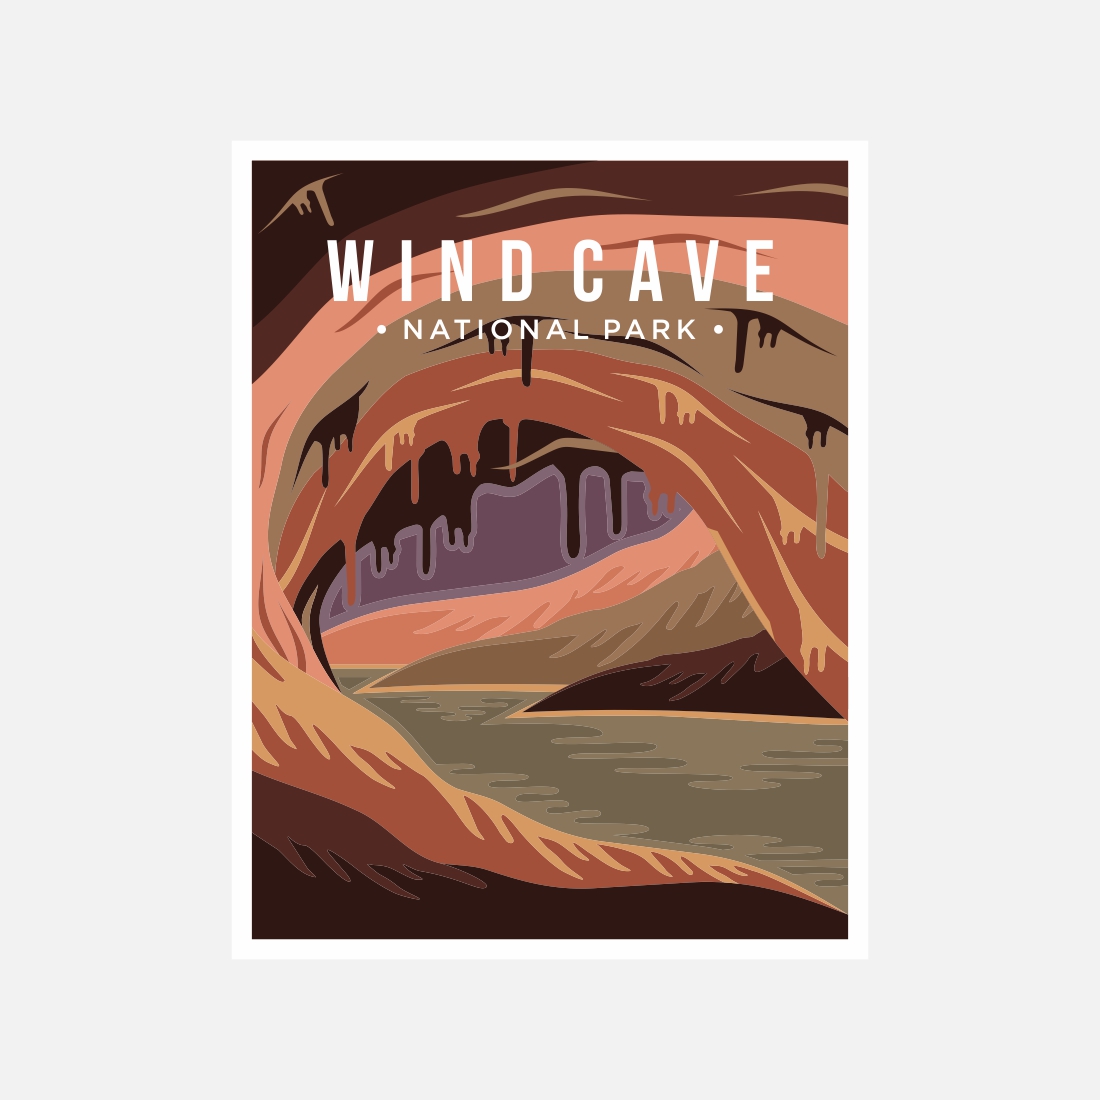 Wind Cave National Park poster vector illustration design – Only $8 preview image.